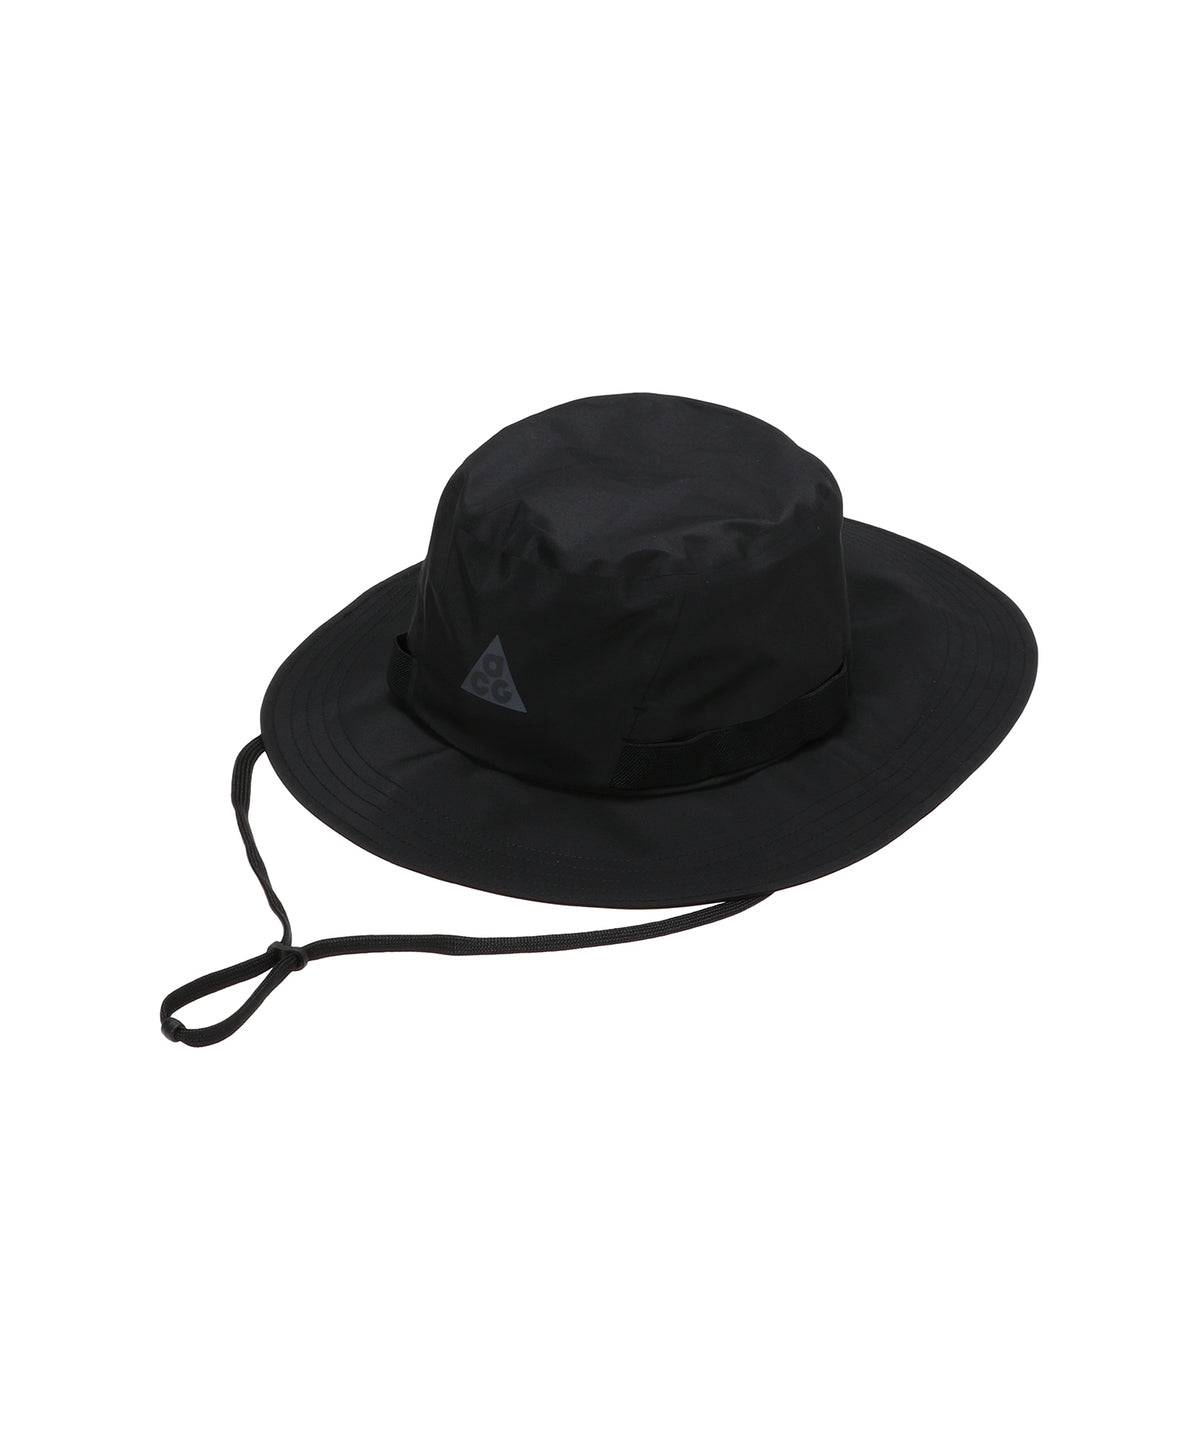 ACG Apex WB Bucket Hat